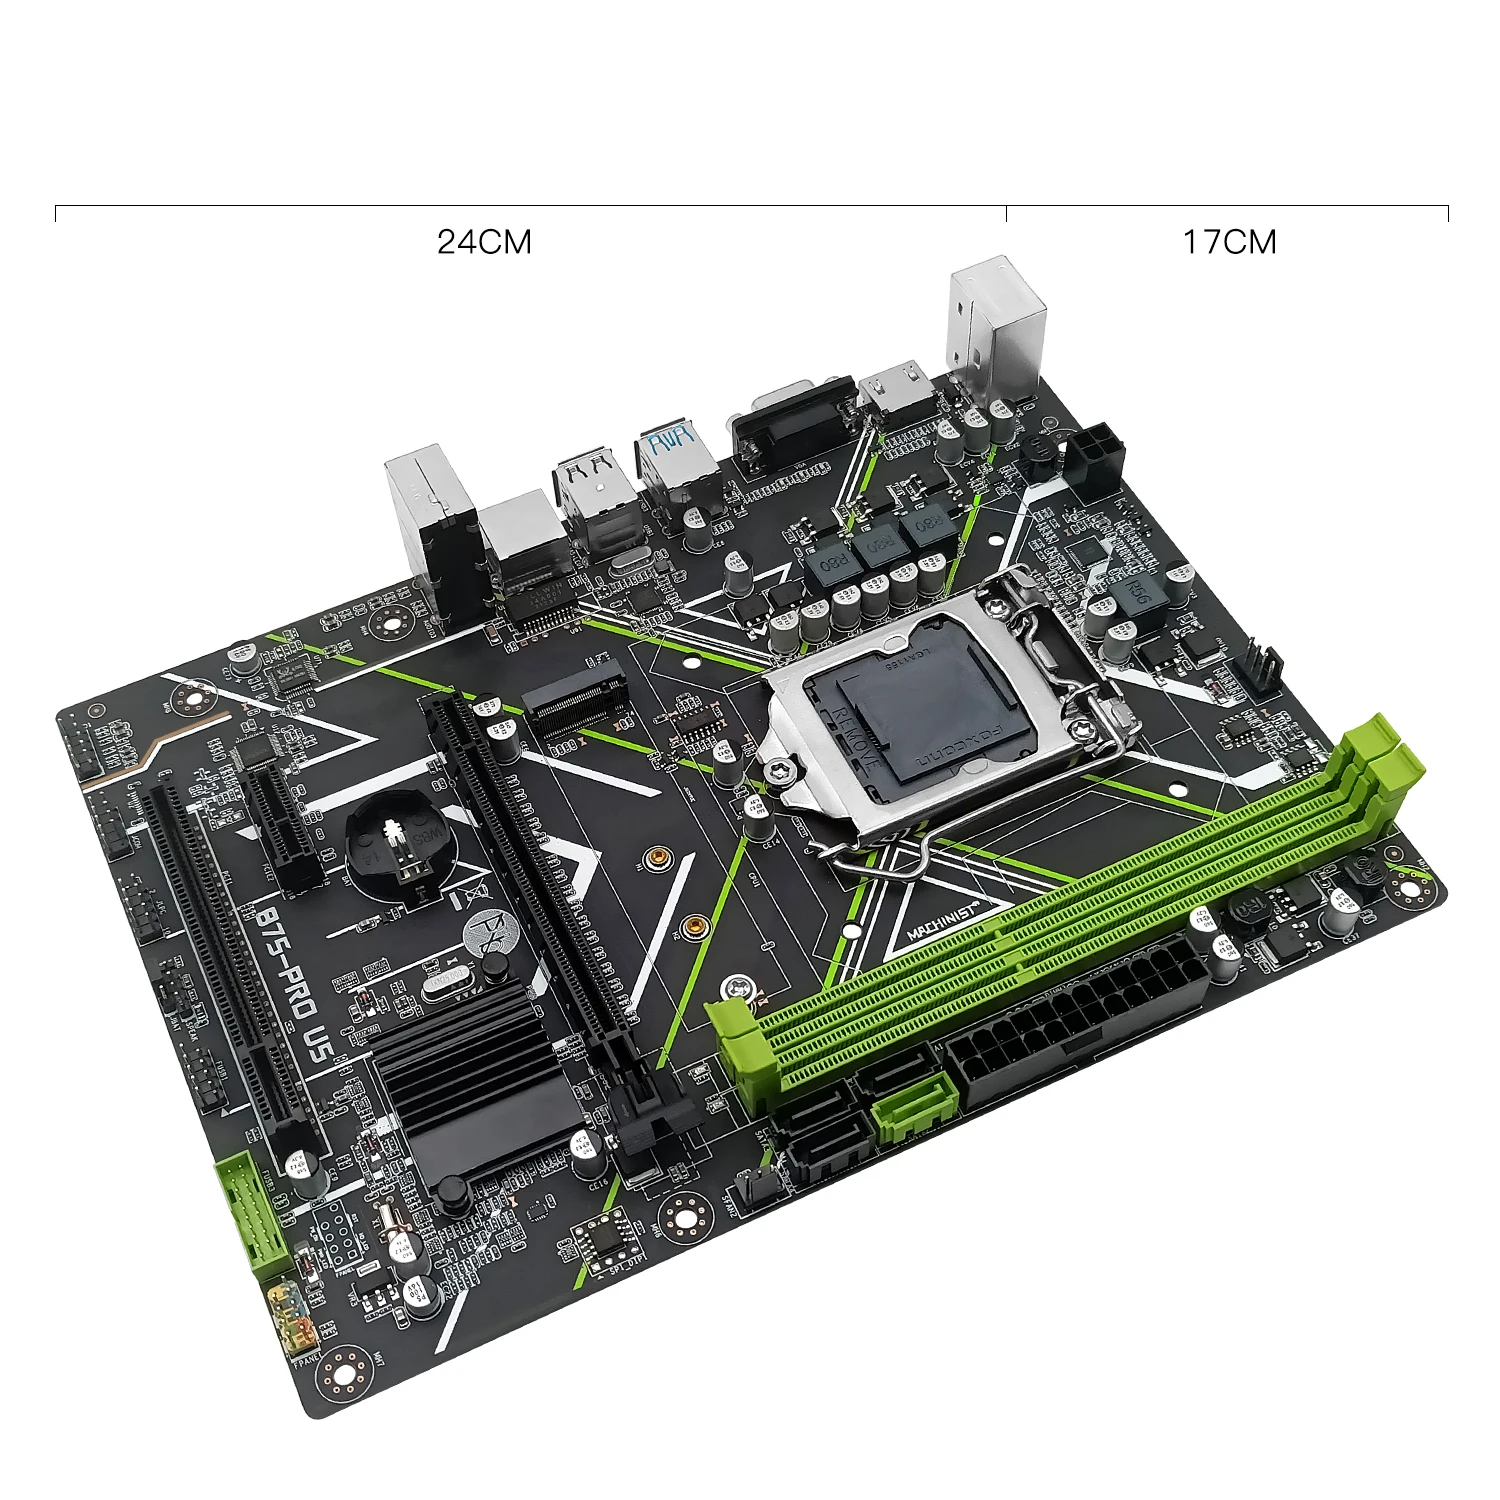 MACHINIST B75 Motherboard LGA 1155 Support Intel Core i3/i5/i7 Series CPU procesador DDR3 RAM Memory HDMI VGA SATA M.2 M-ATX